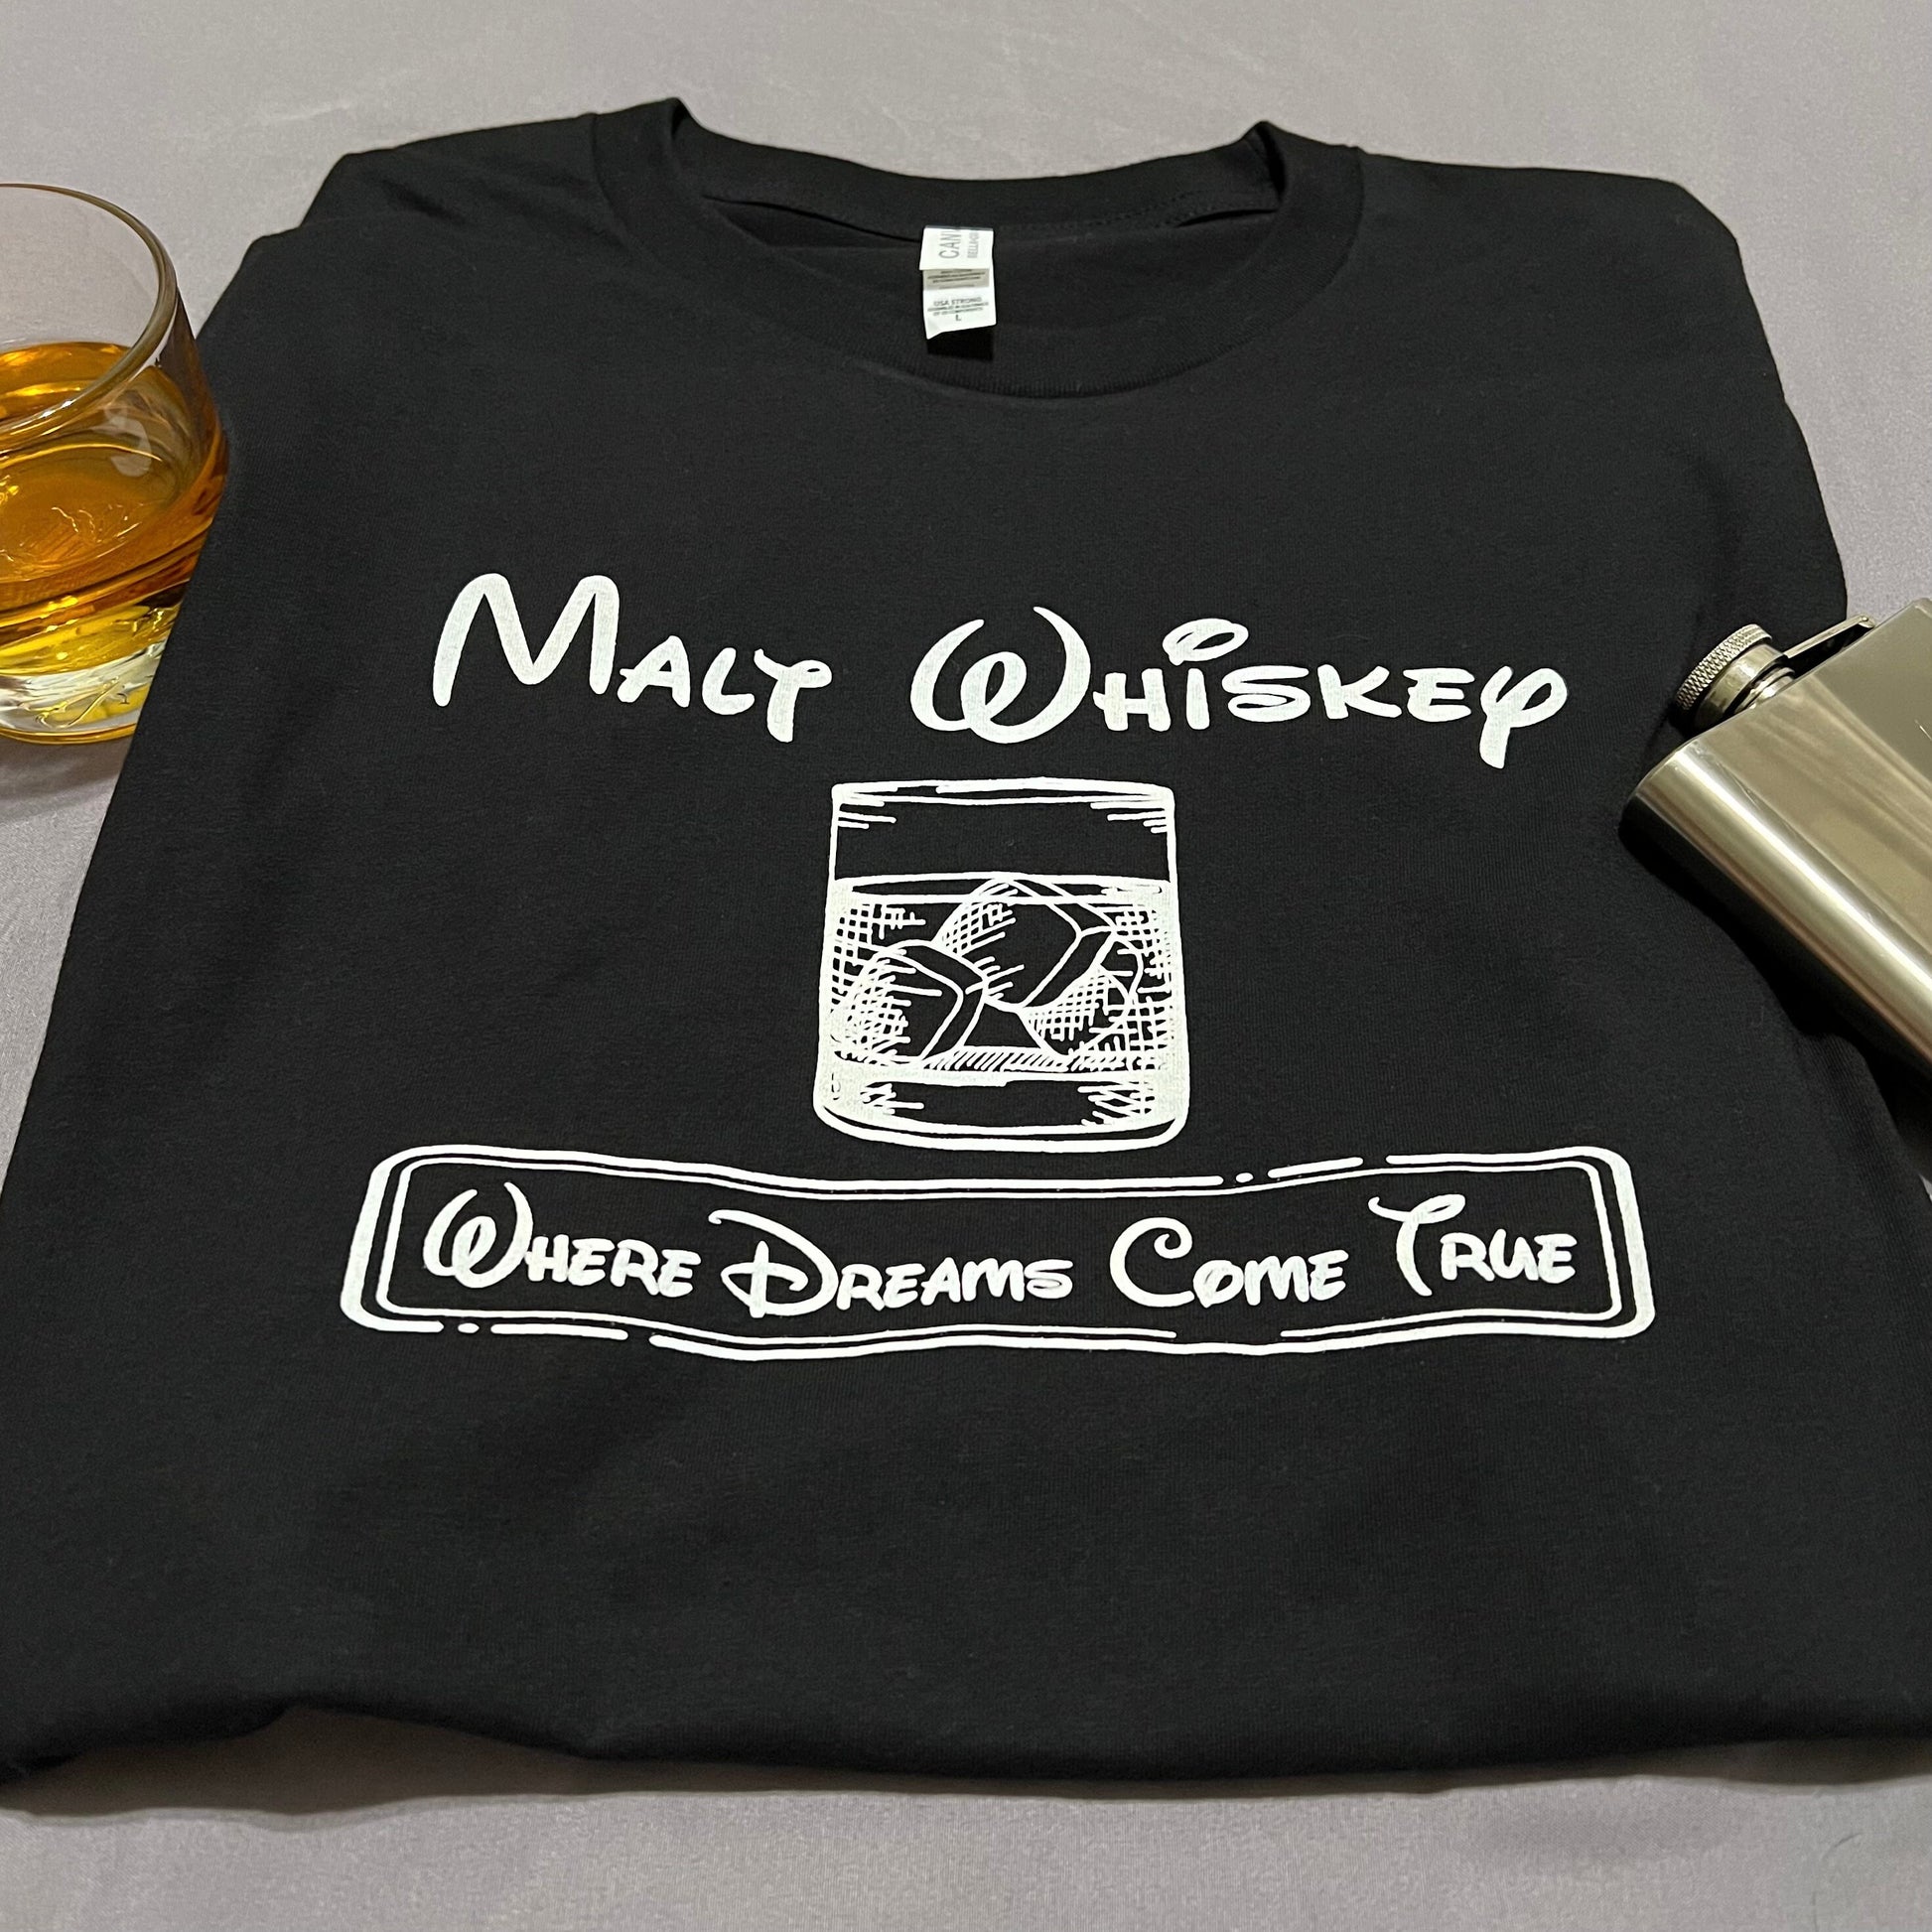 Malt Whiskey t shirt